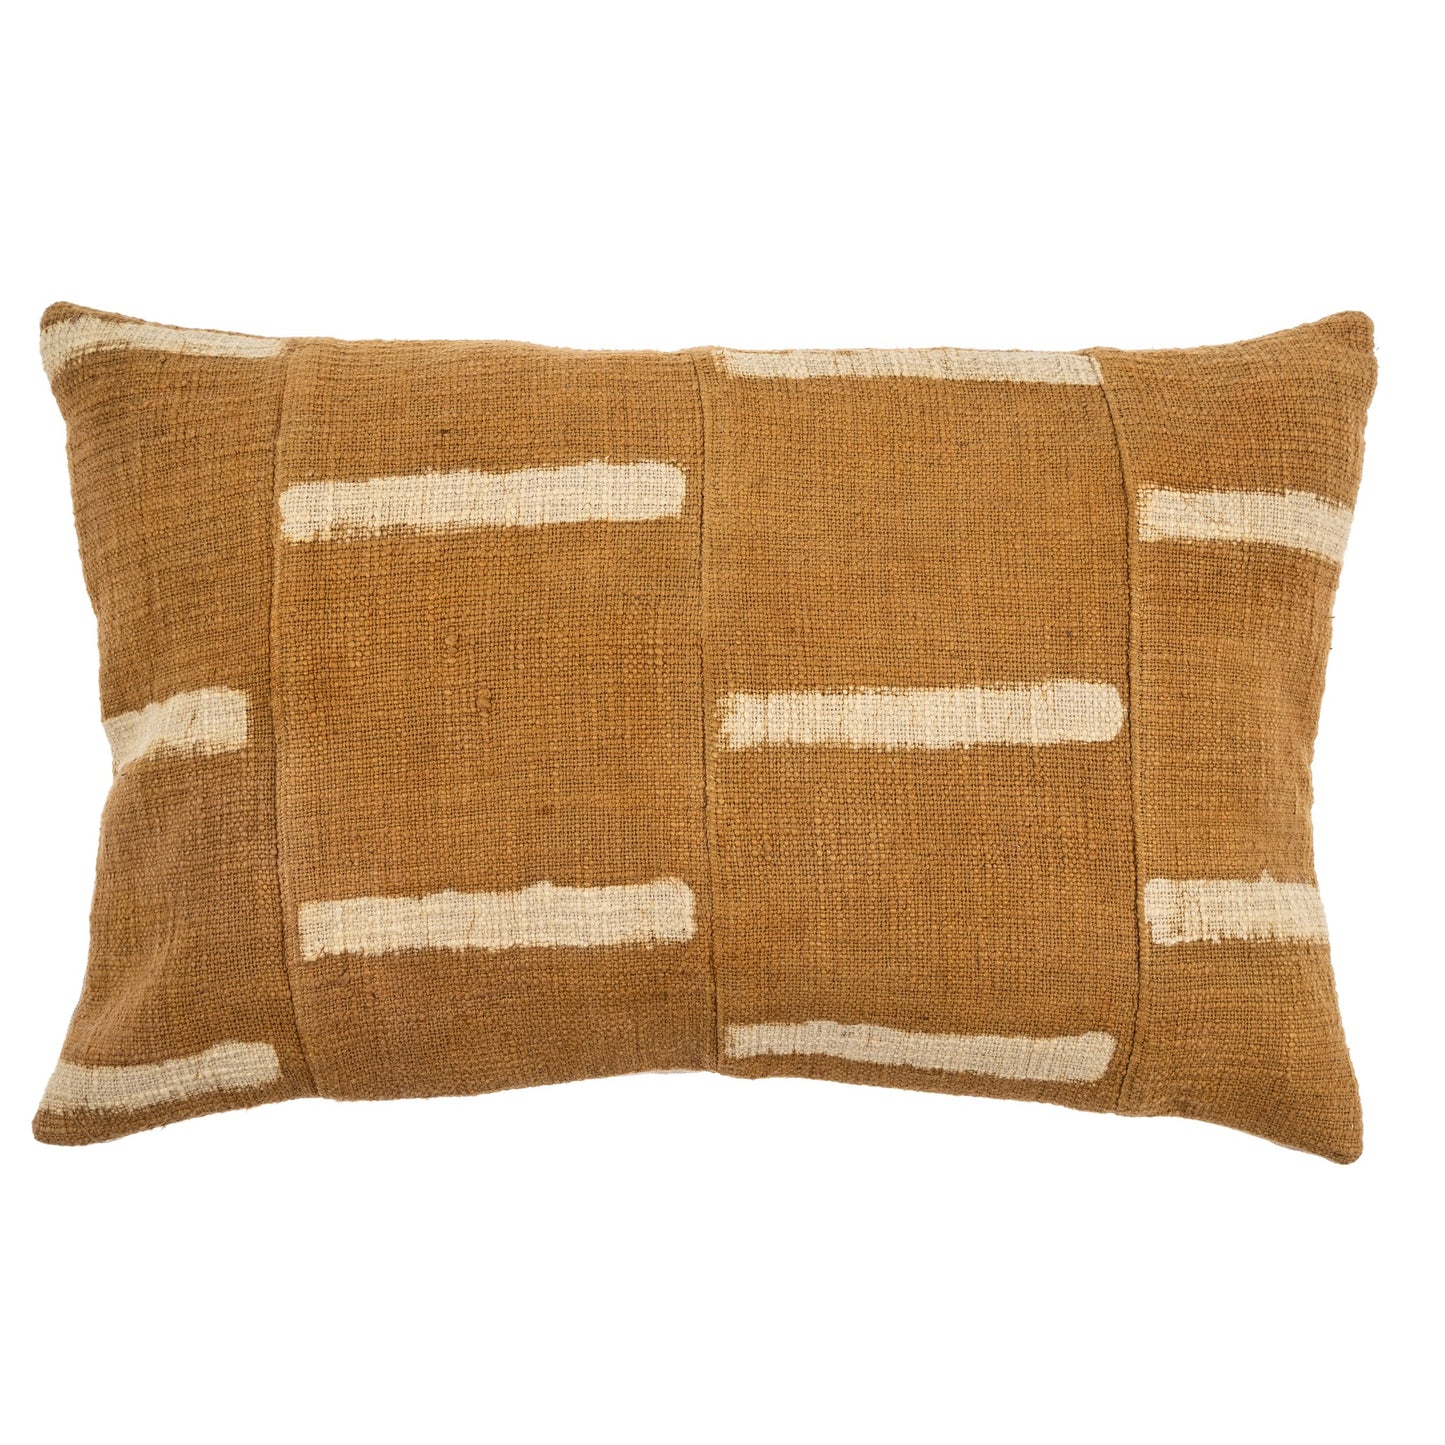 Dash Pillow, Cinnamon 16x24